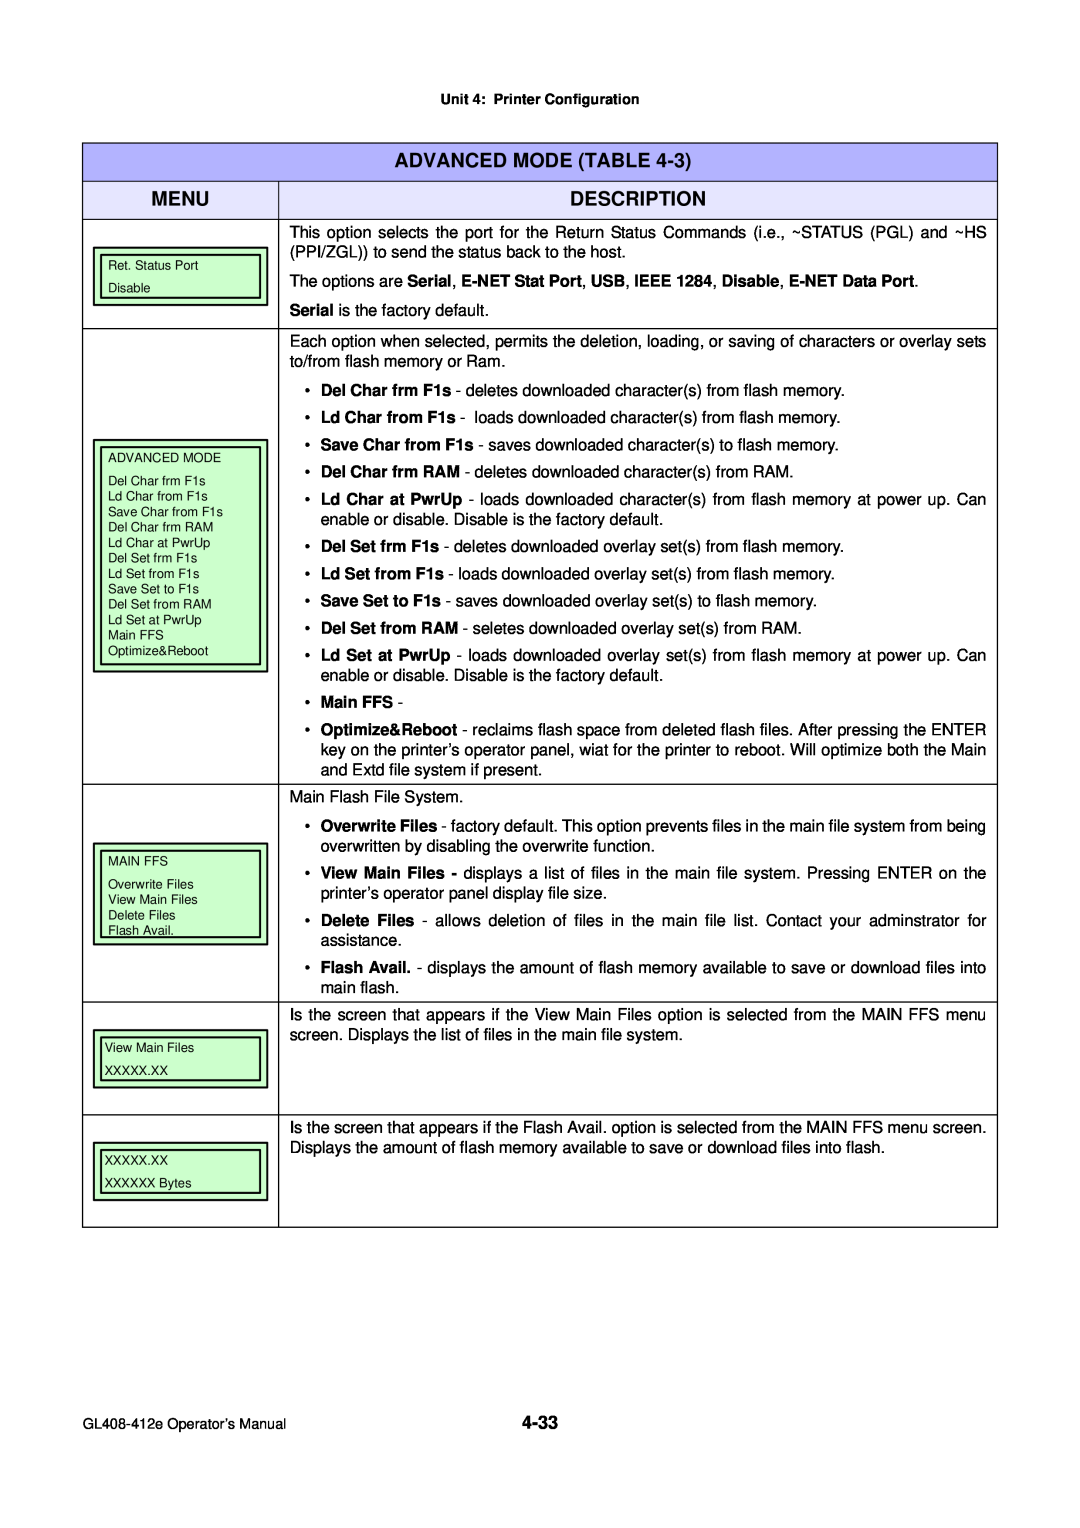 SATO GL4XXE manual Advanced Mode Table, Menu, Description, Main FFS 